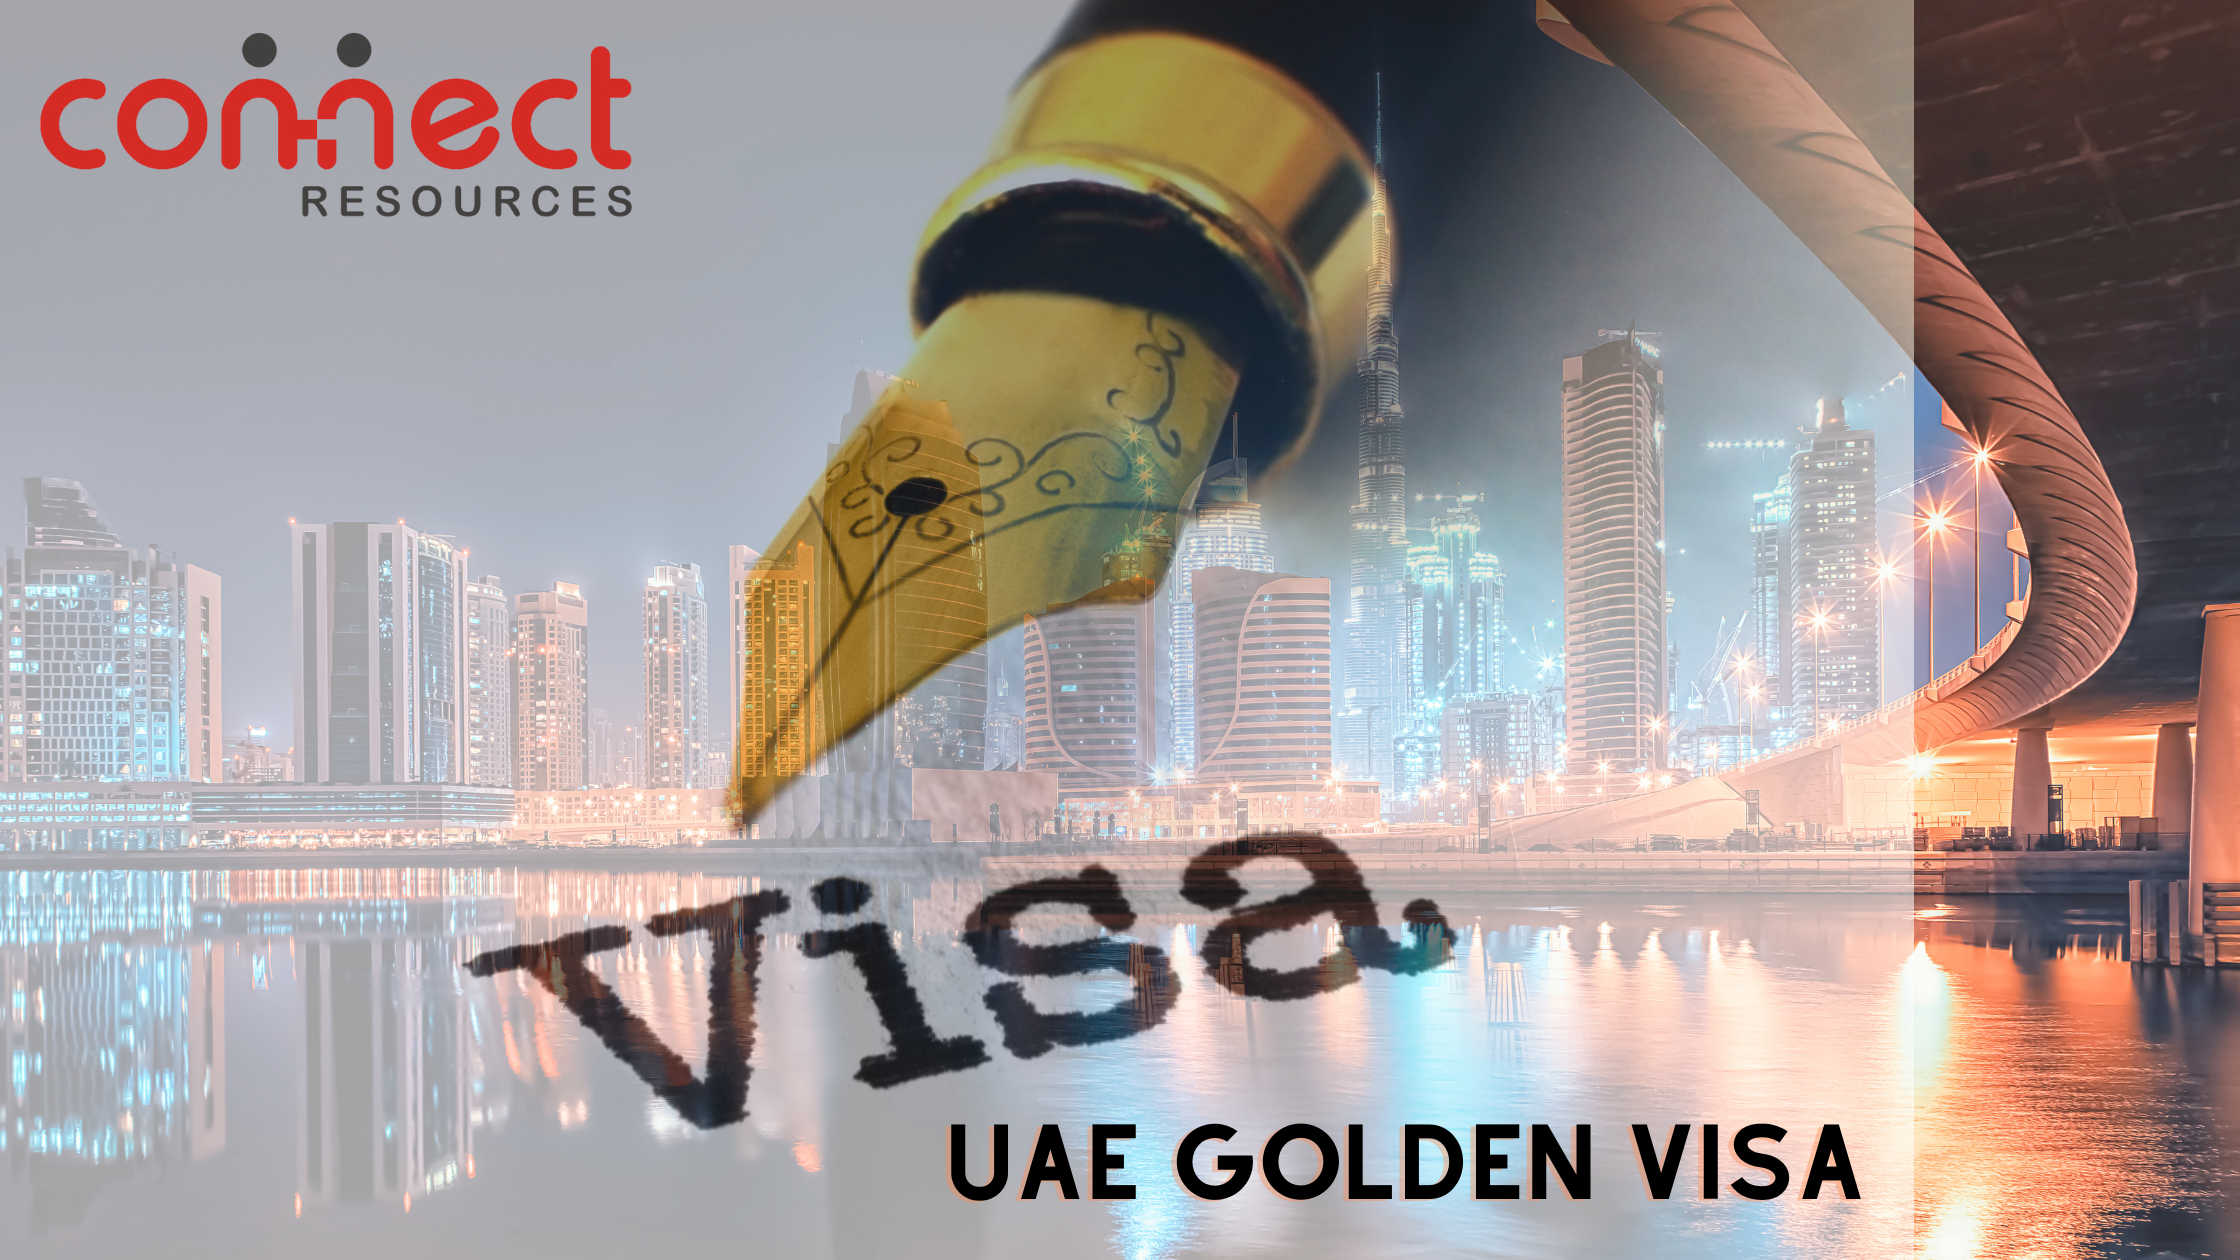 UAE Golden Visa Connect Resources